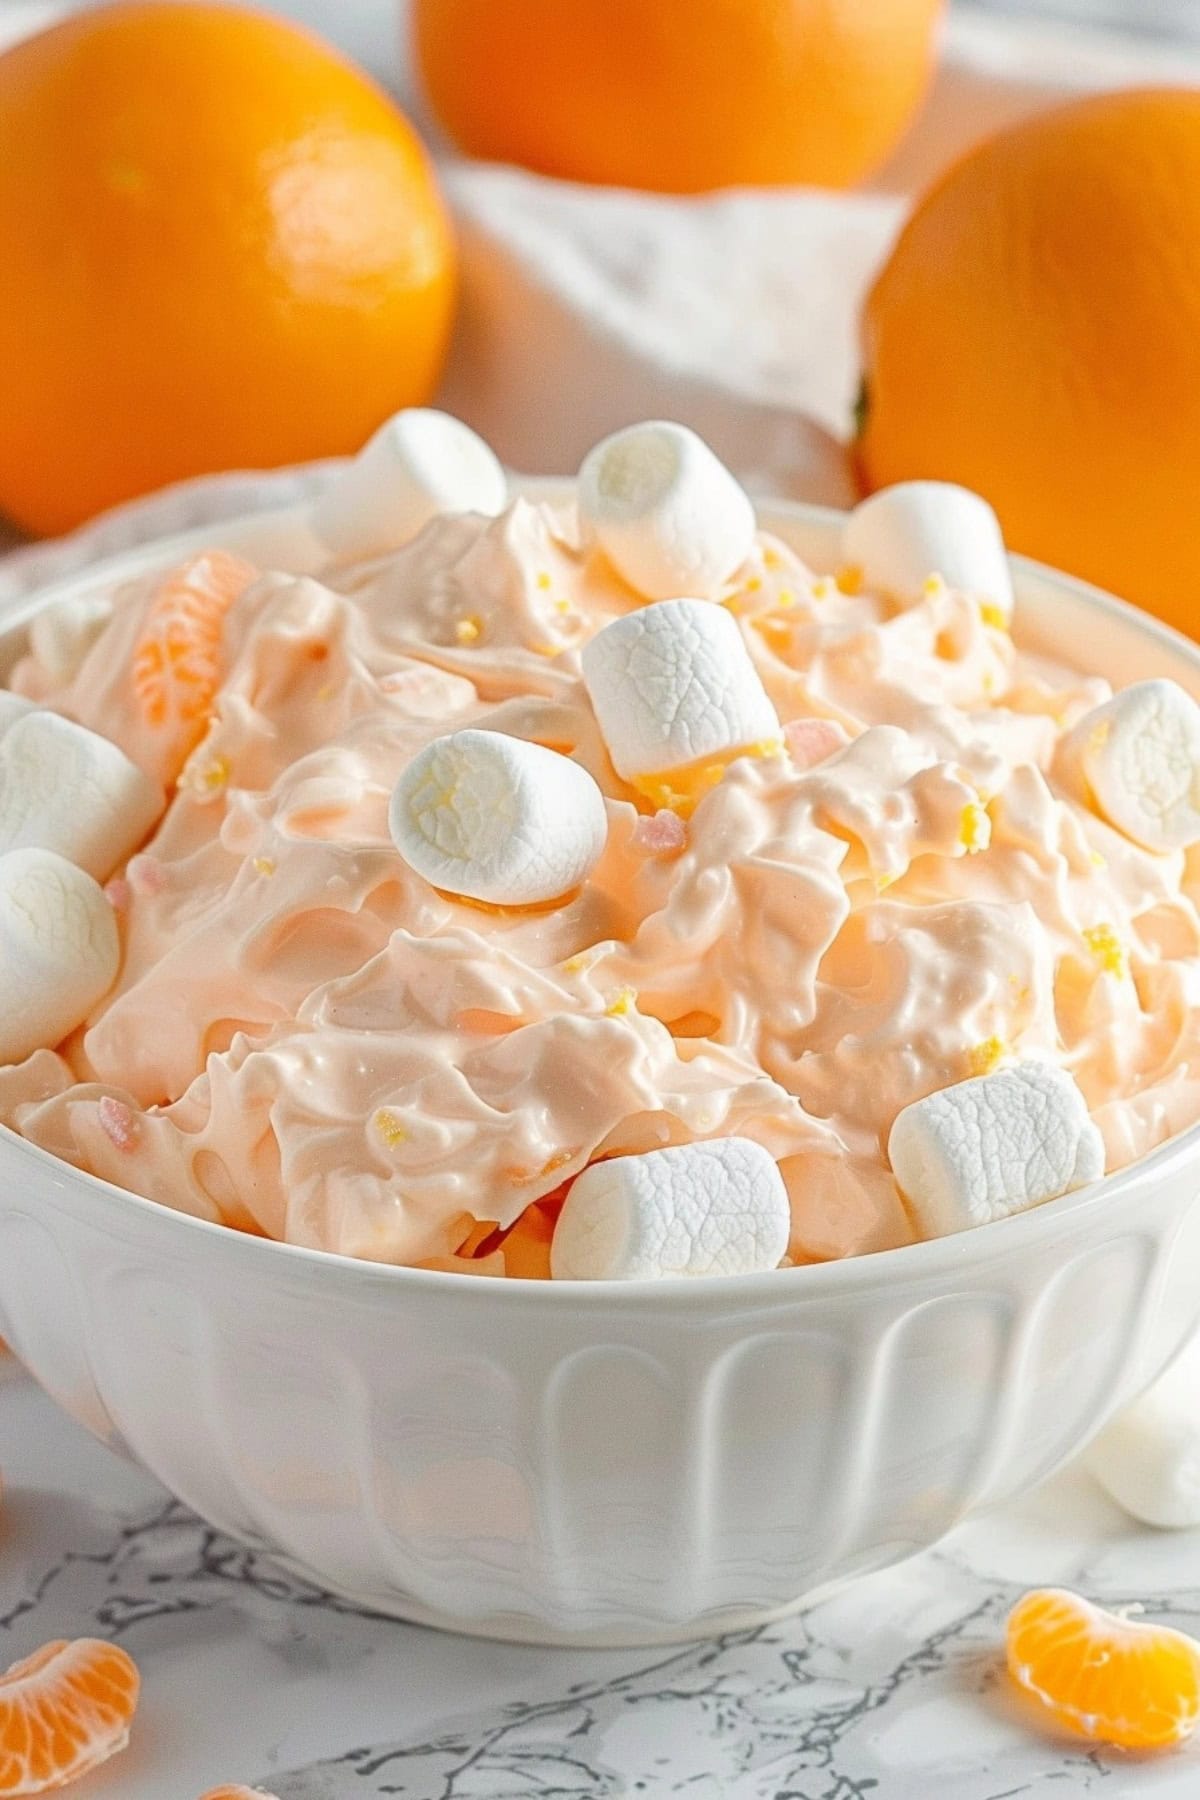 Orange fluff salad served in a white bowl with marshmallow garnish.